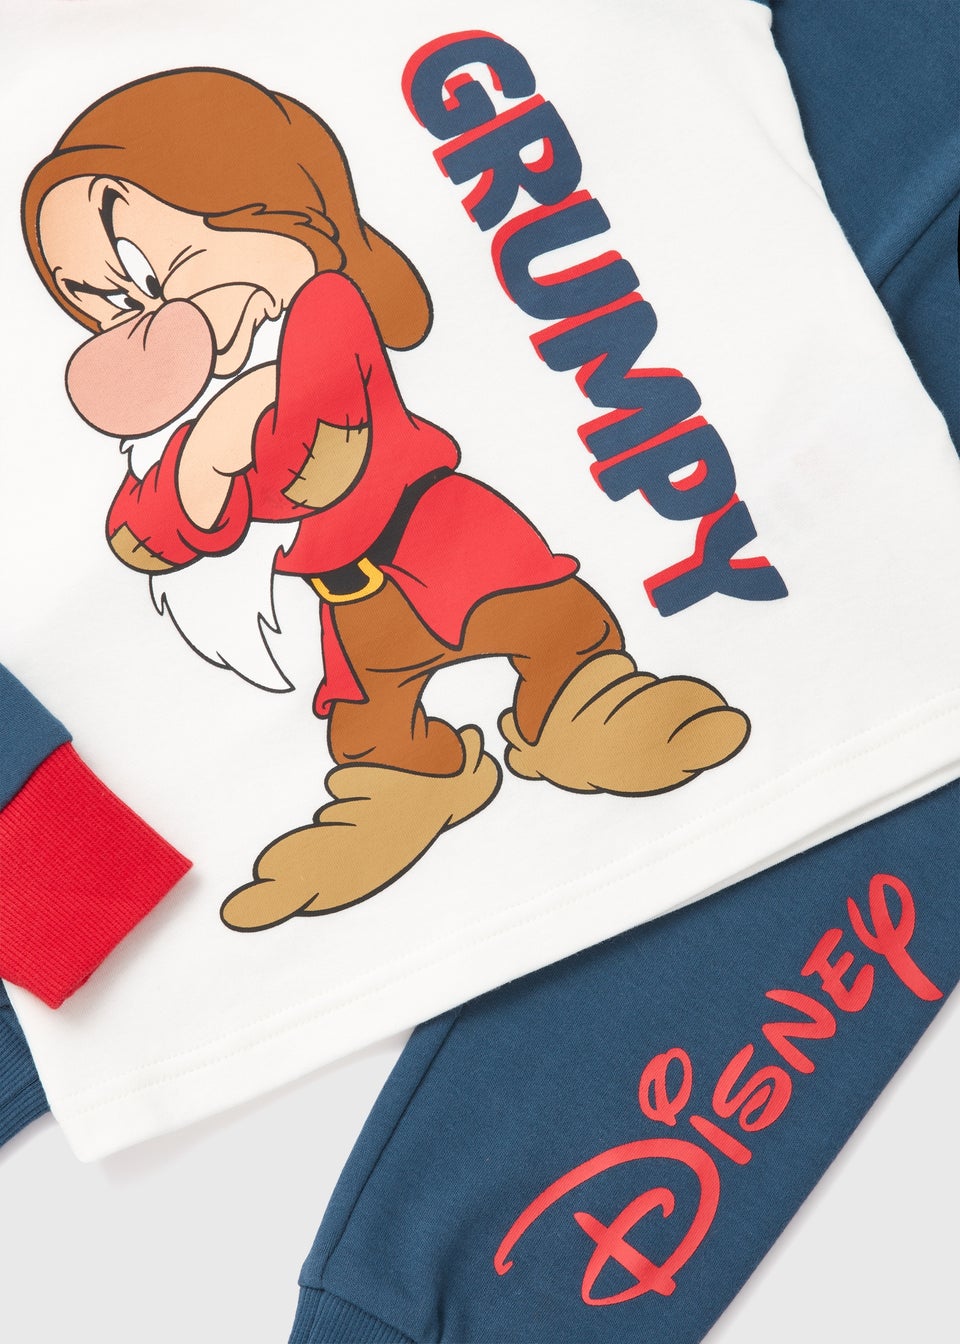 Disney Kids Navy Grumpy Pyjama Set (9mths-6yrs)